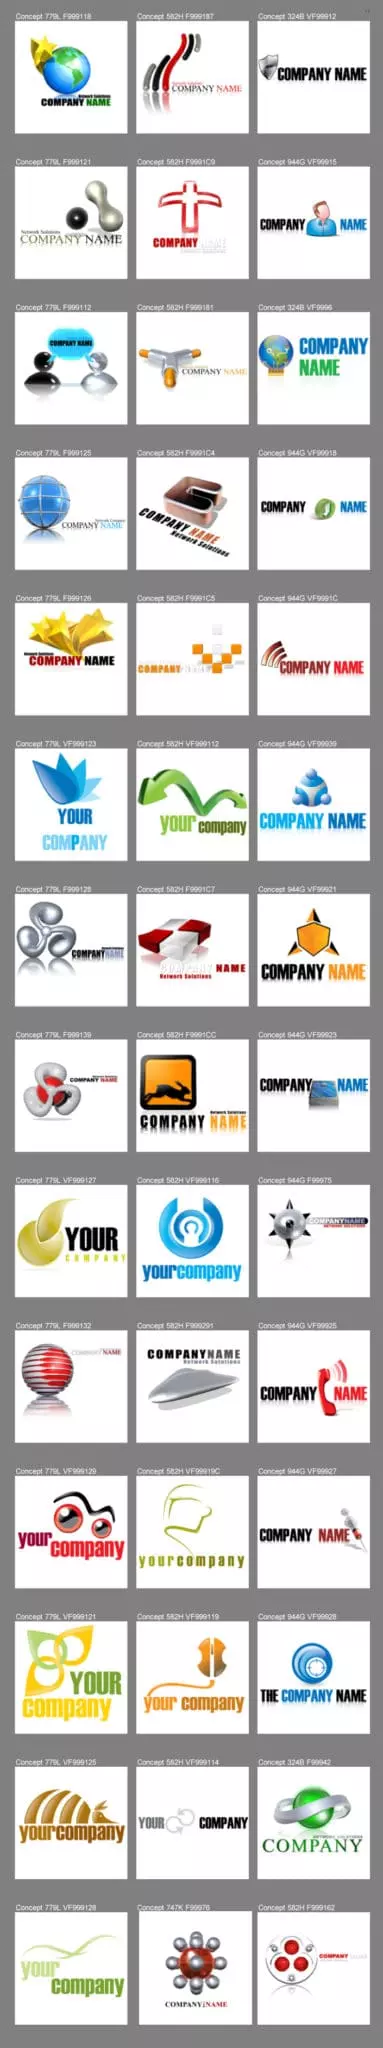 Elements of a Great Logo set 11